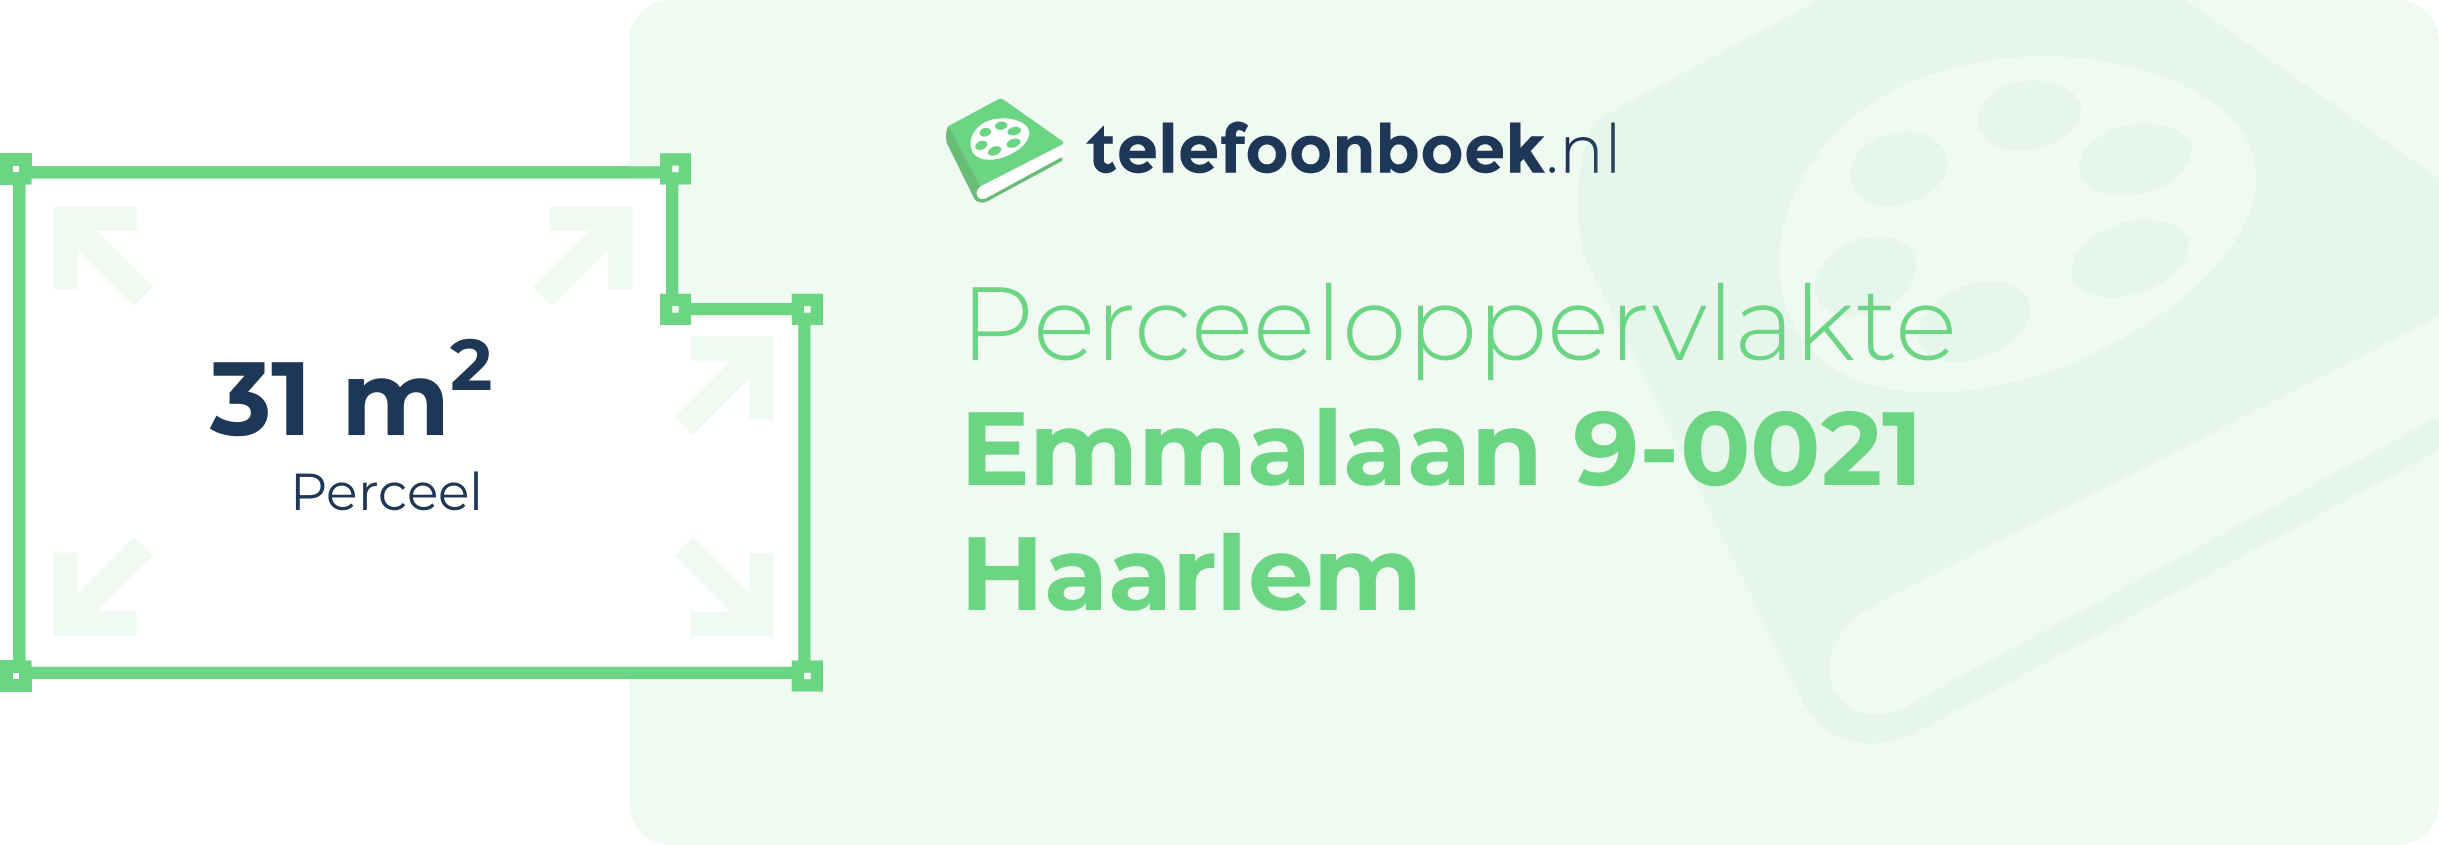 Perceeloppervlakte Emmalaan 9-0021 Haarlem